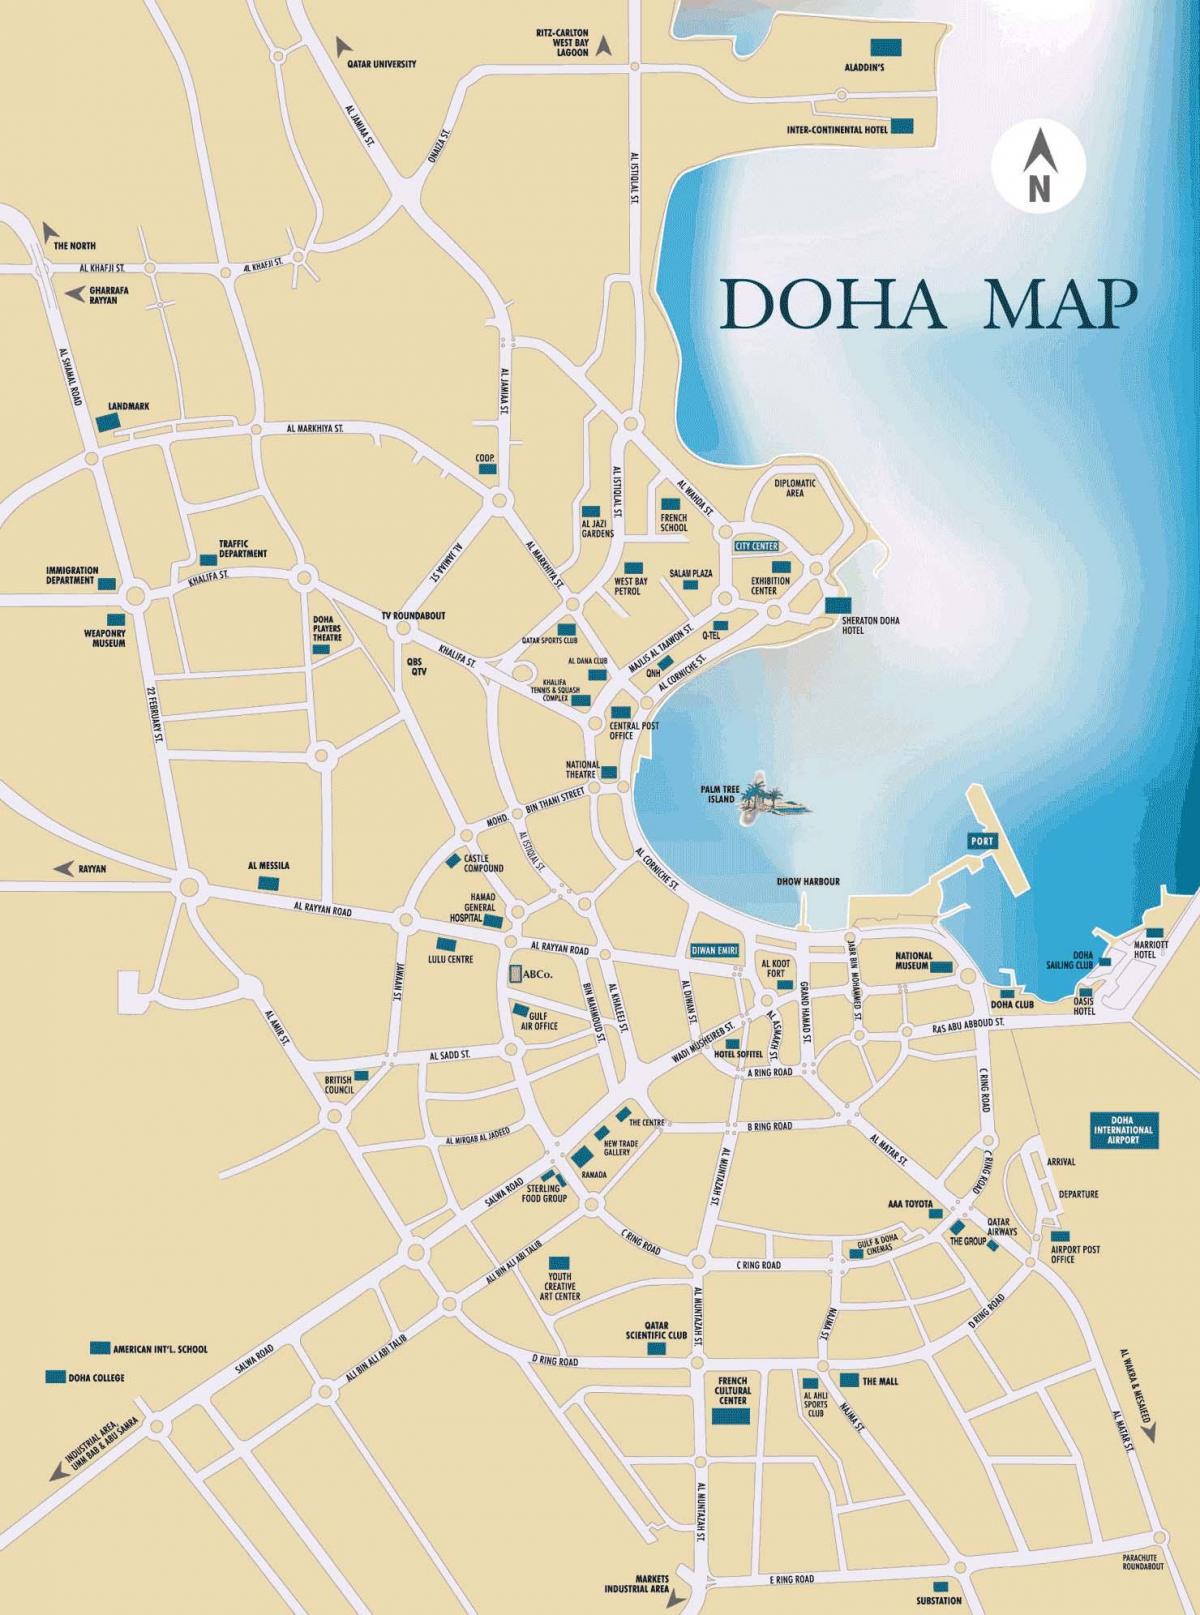 Doha, katar haritası 